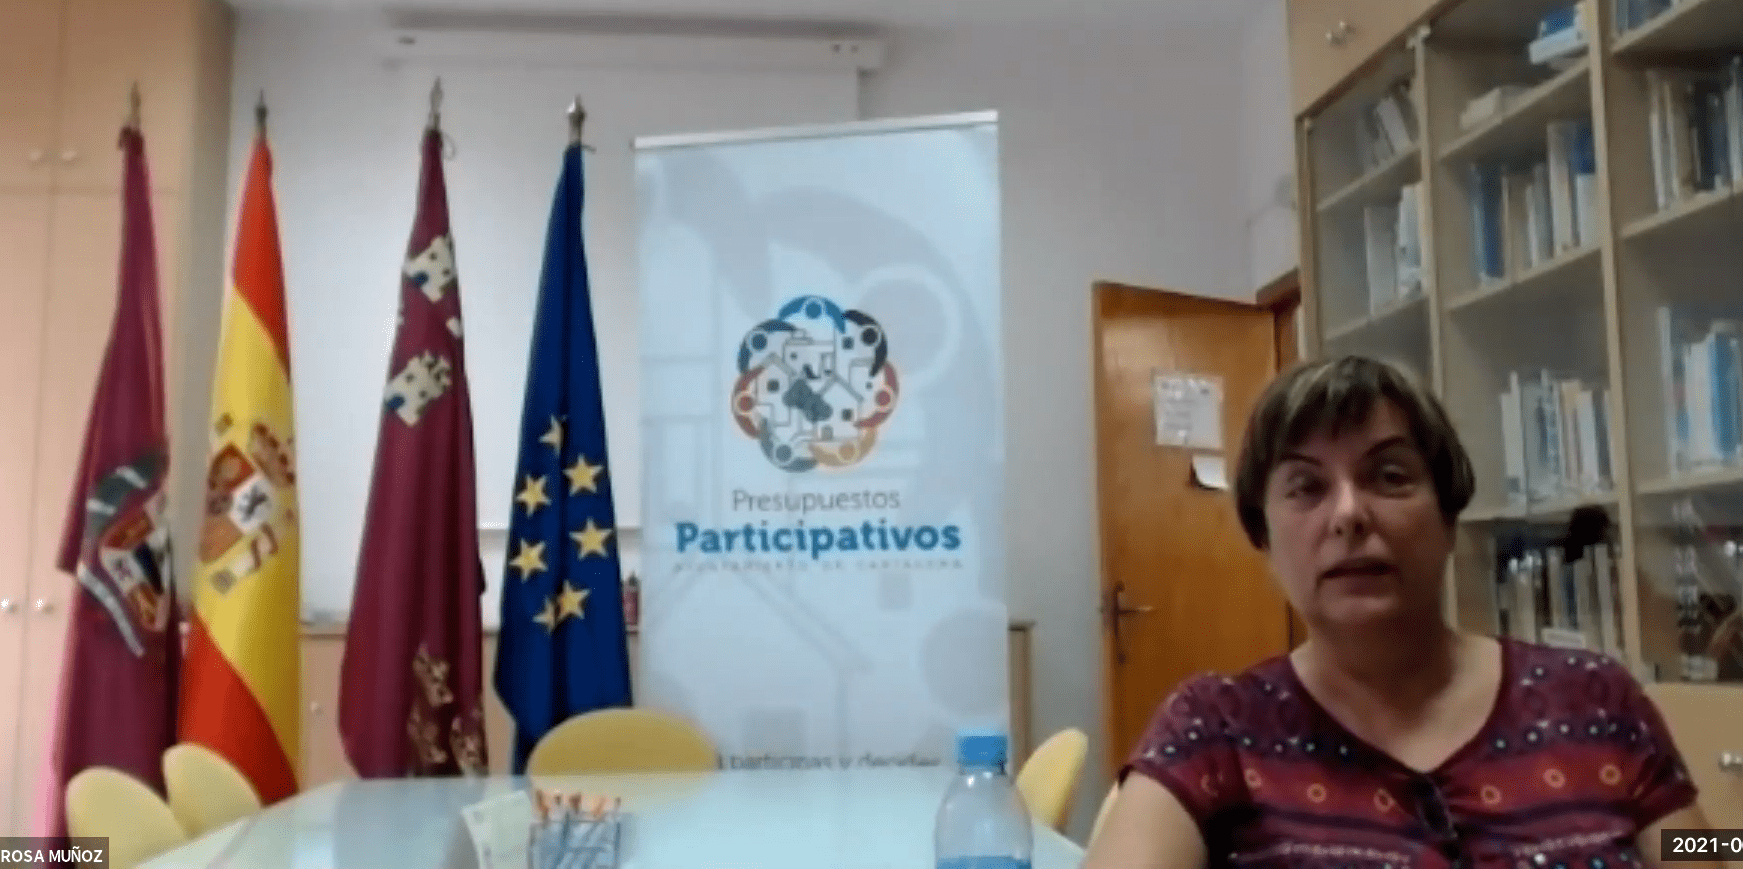 Interview with Rosa Muñoz, Citizen Participation Technician of the City of Cartagena (Murcia)